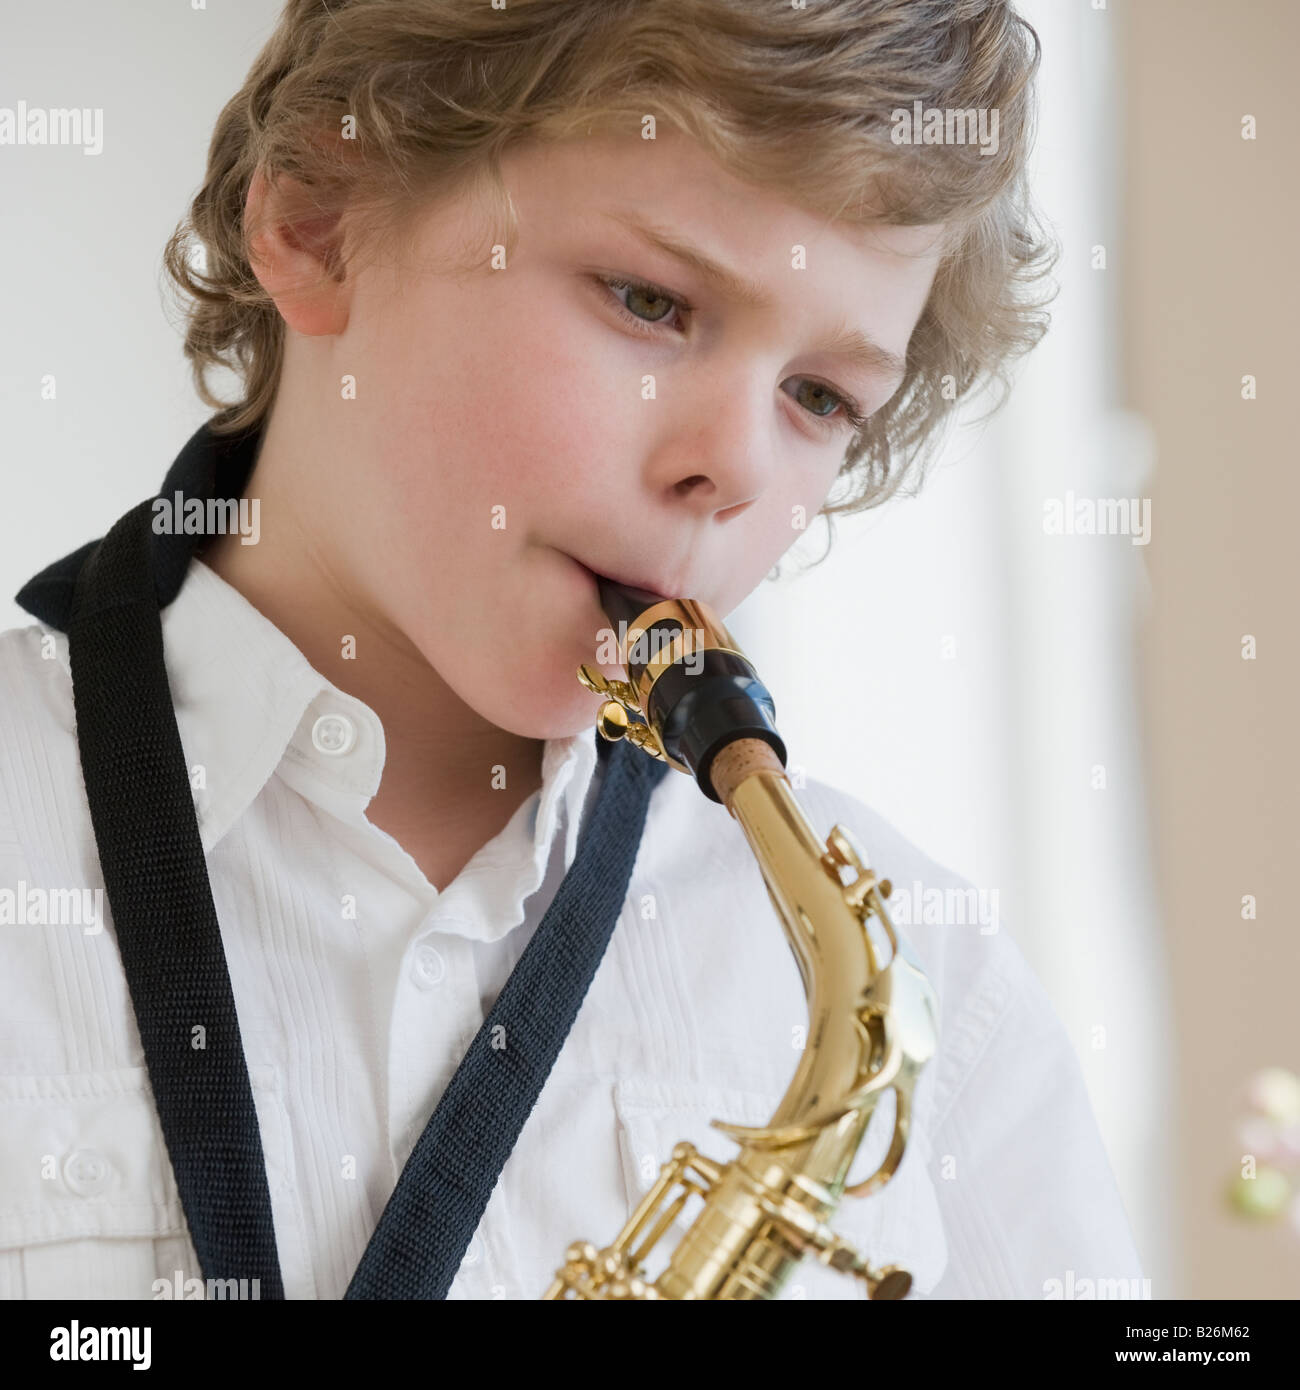 Boy playing saxophone Stock Photo